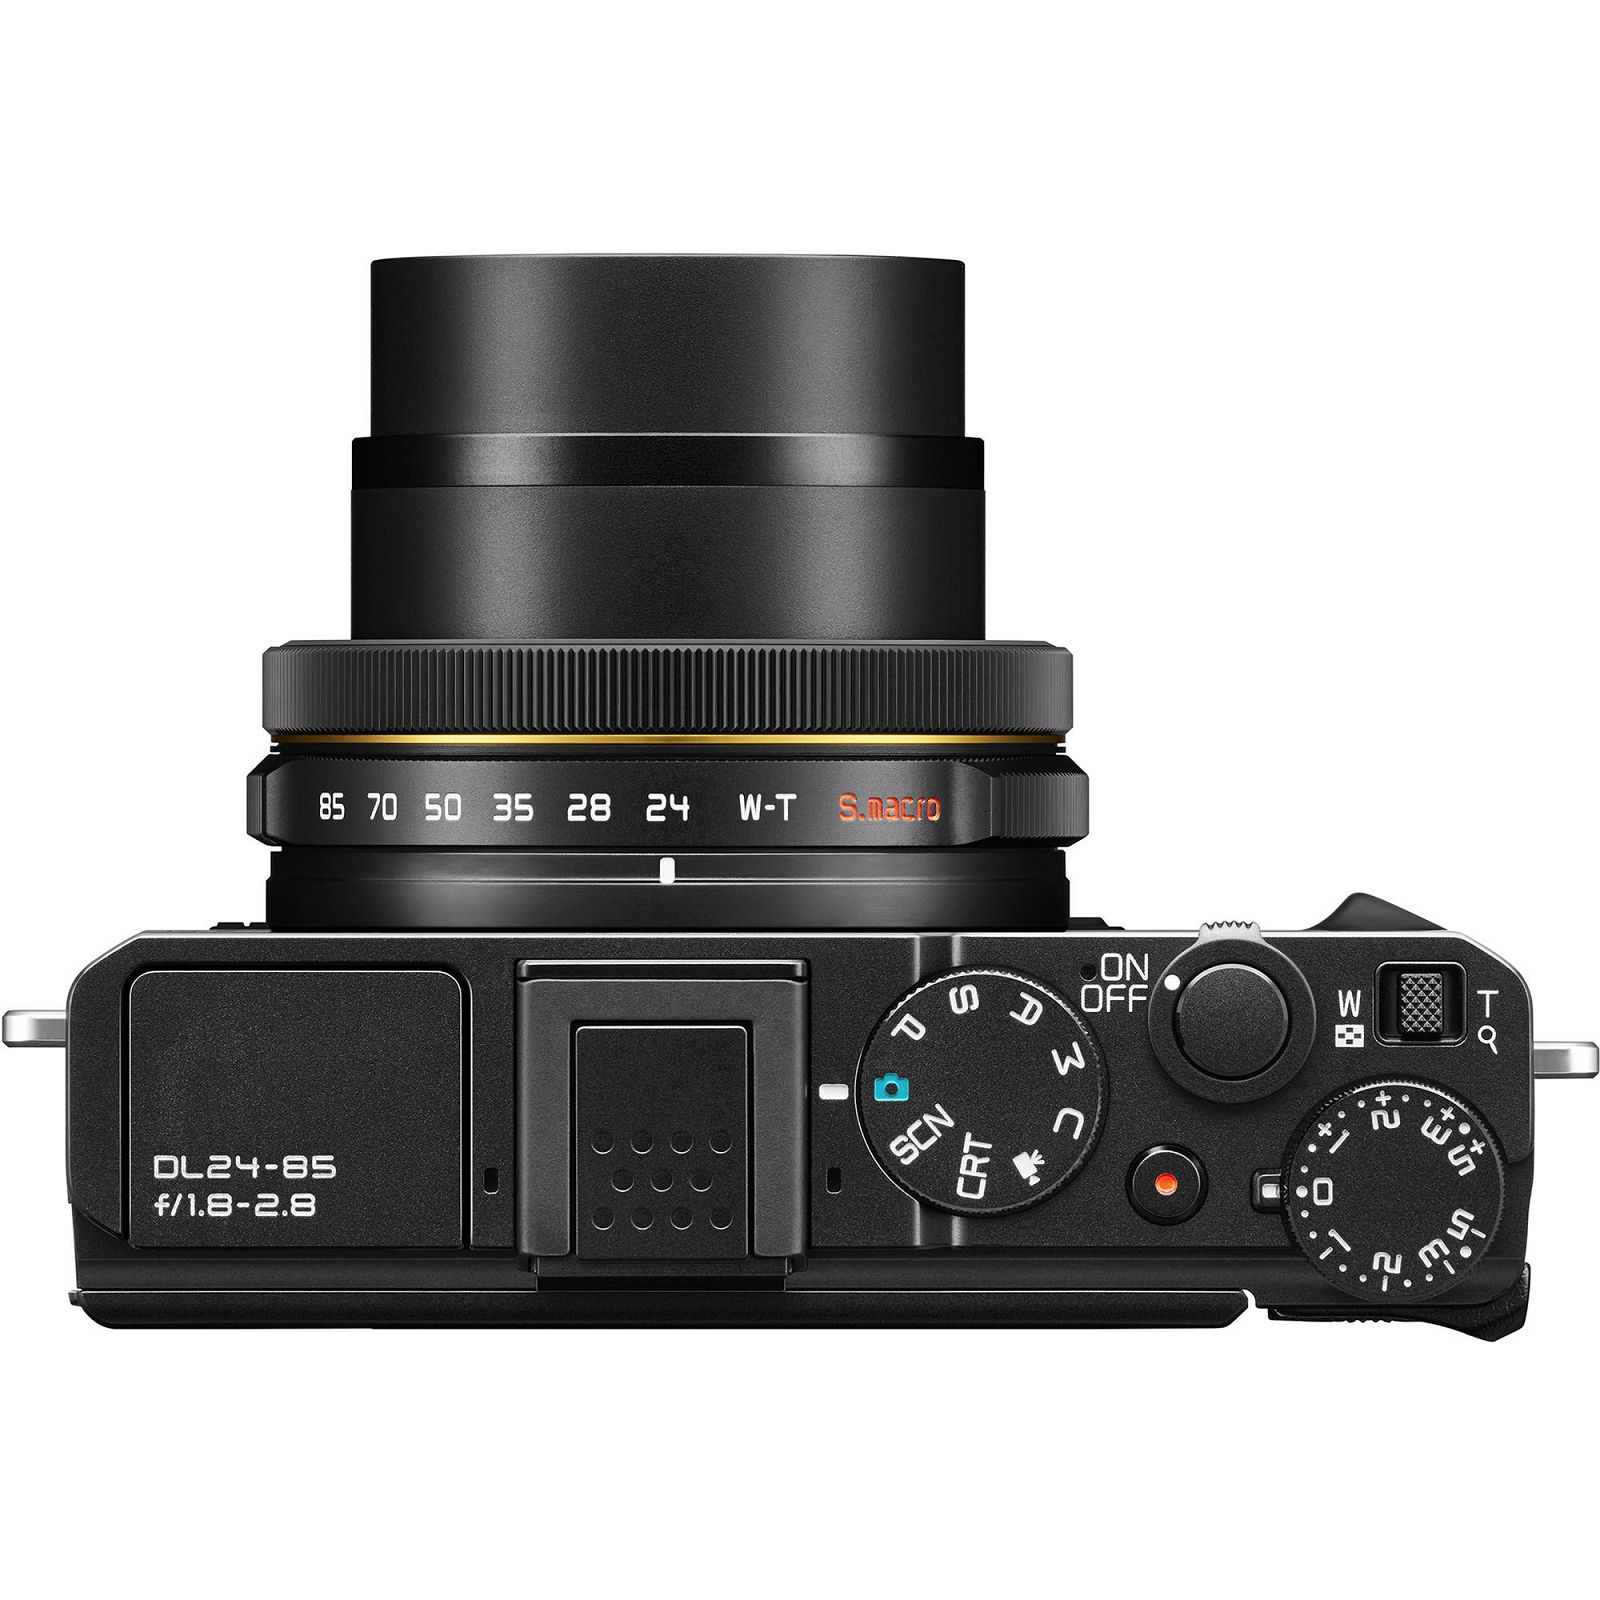 Nikon DL 24-85 f/1.8-2.8 Black Premium kompaktni digitalni fotoaparat Digital Camera VNA920E1